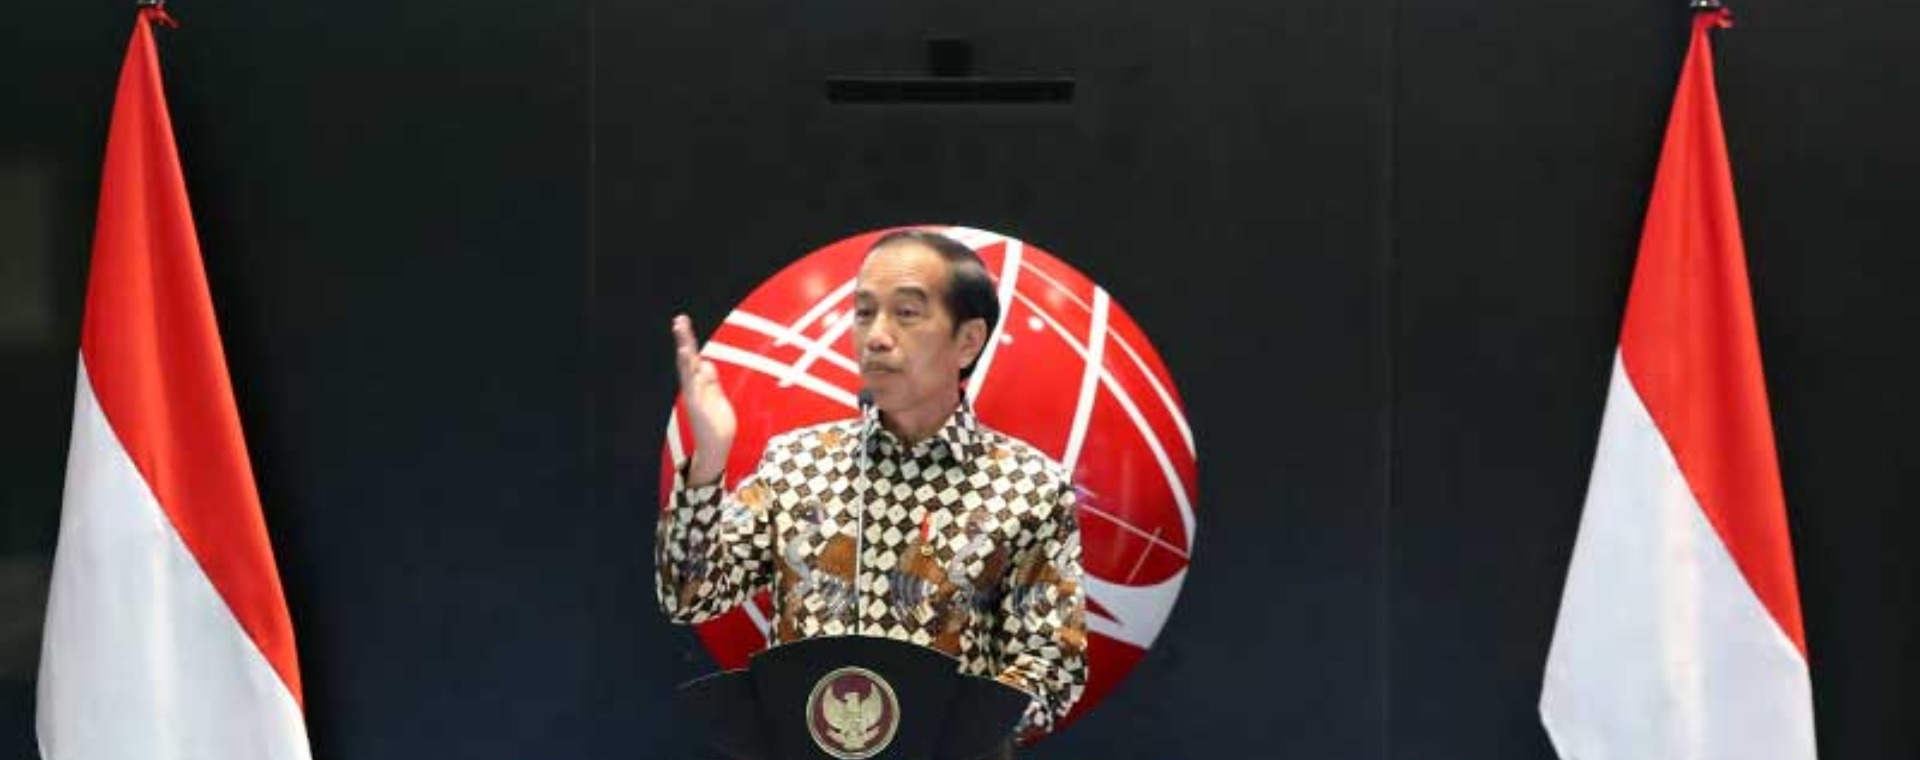 President Joko "Jokowi" Widodo opened the stock market's first trading day in 2022, Monday (1/3 - 2022).